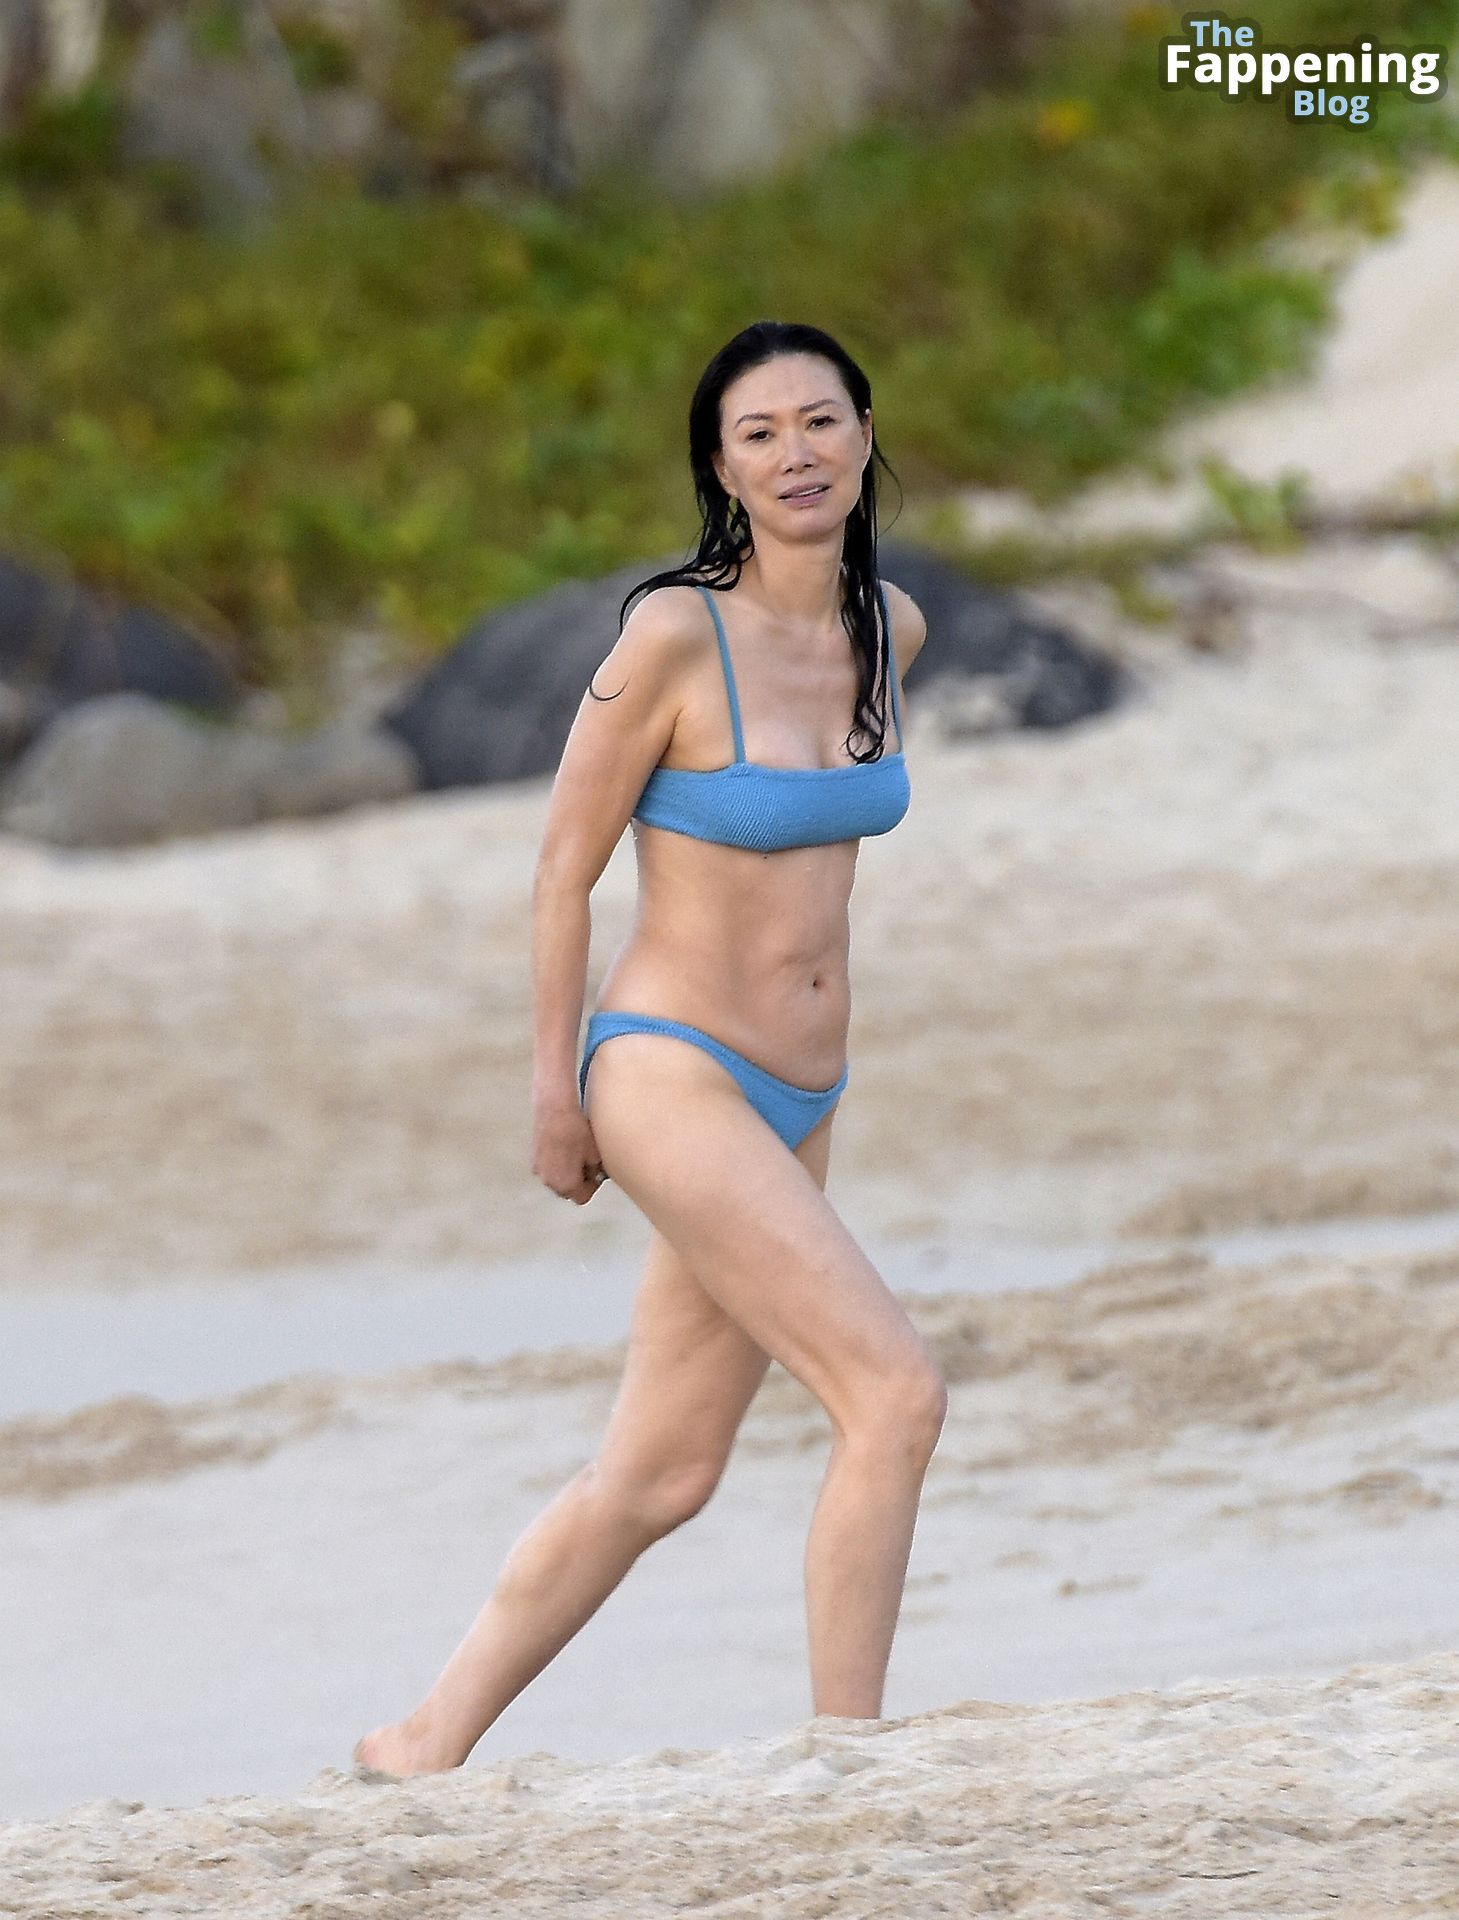 Wendi Deng Murdoch Shows Off Her Sexy Bikini Body as She Hits the Beach in St Barts (38 Photos)